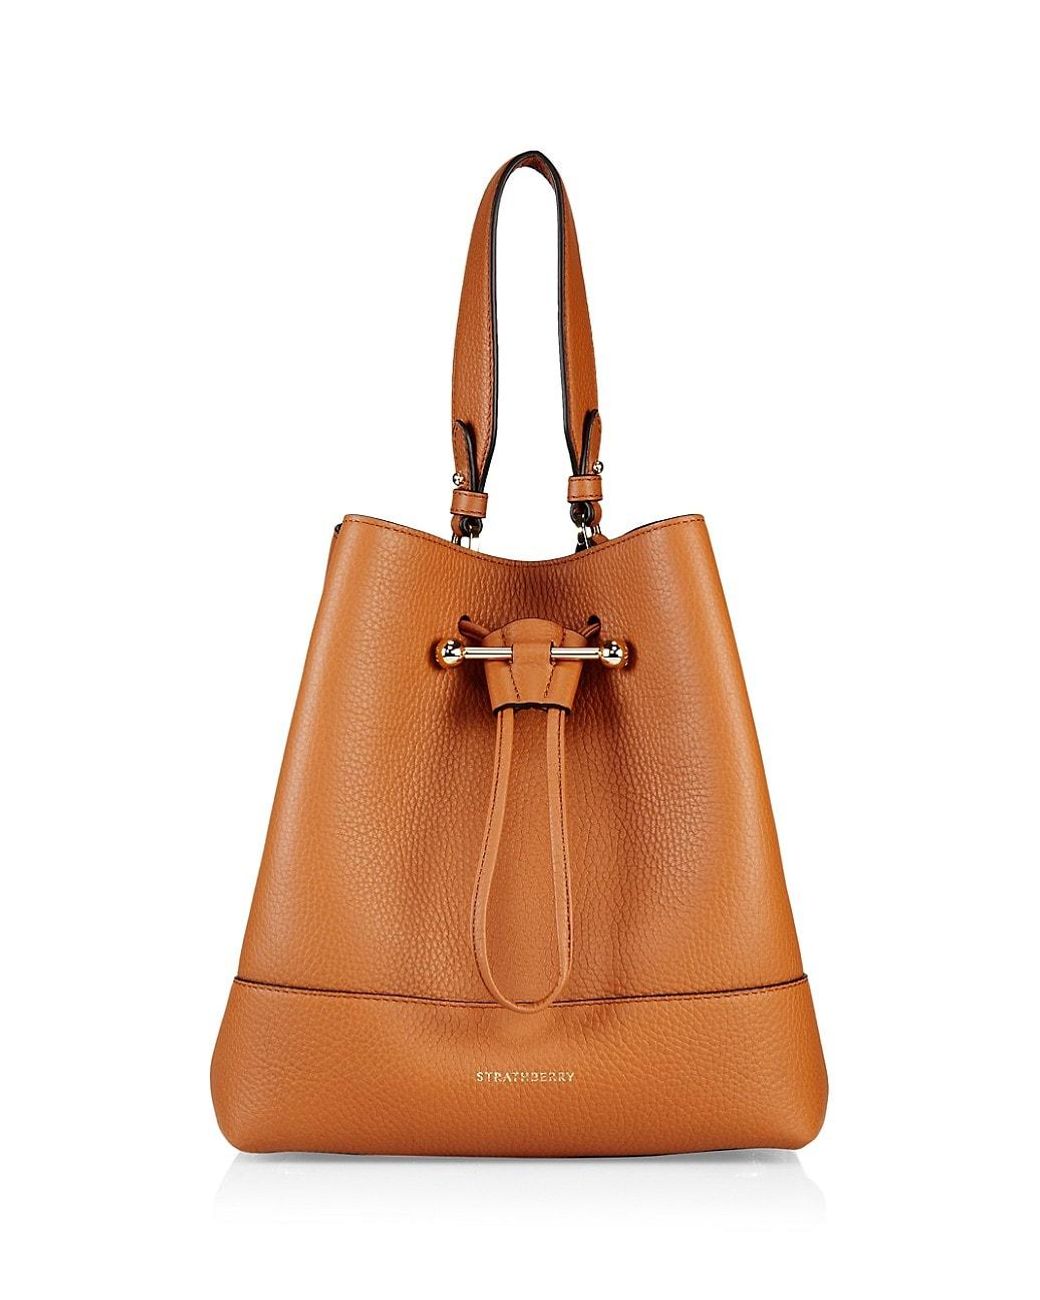 Strathberry Lana Osette Leather Bucket Bag in Orange | Lyst